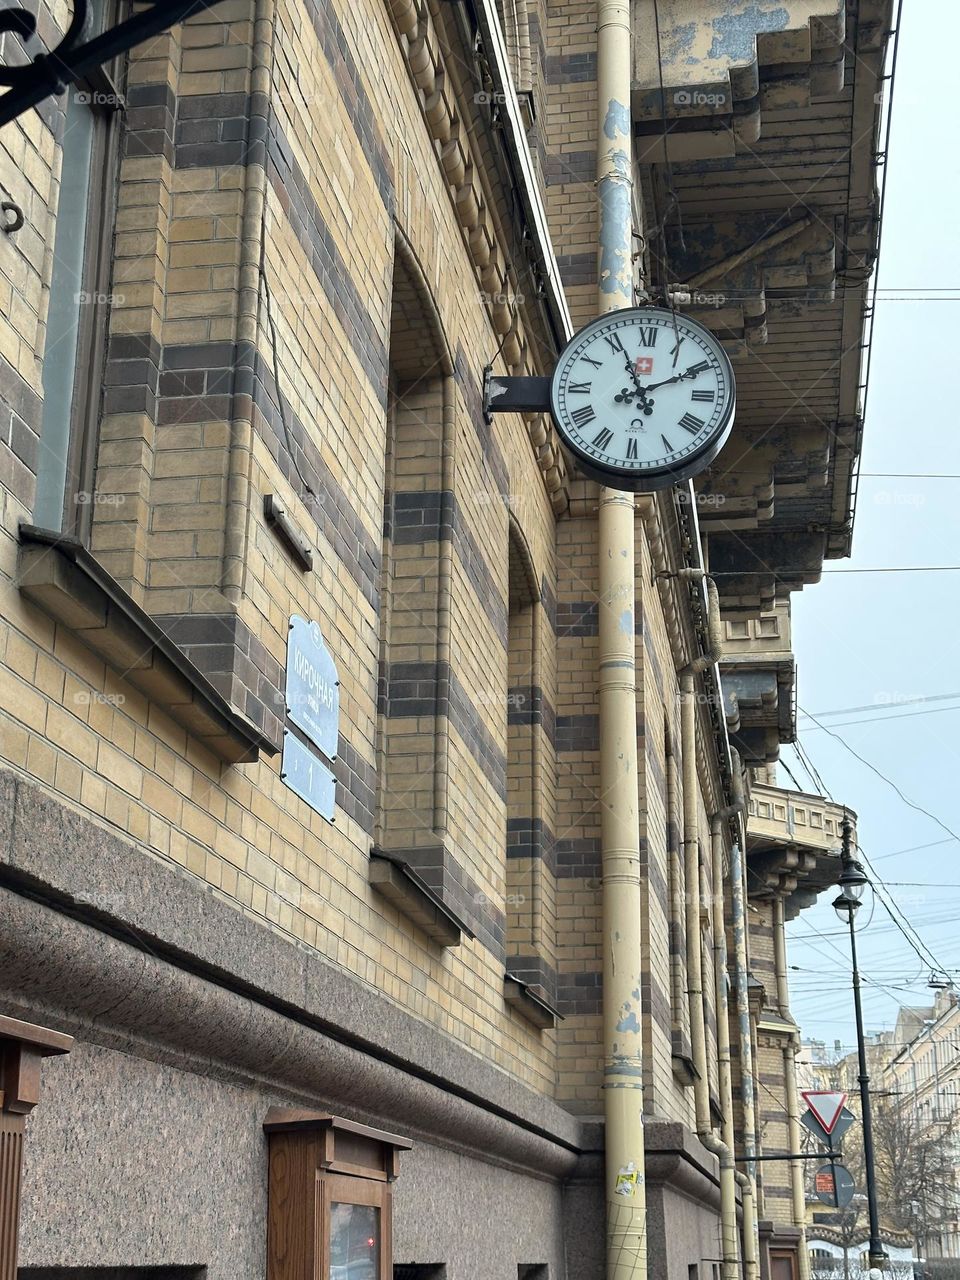 City Architecture and big clock 